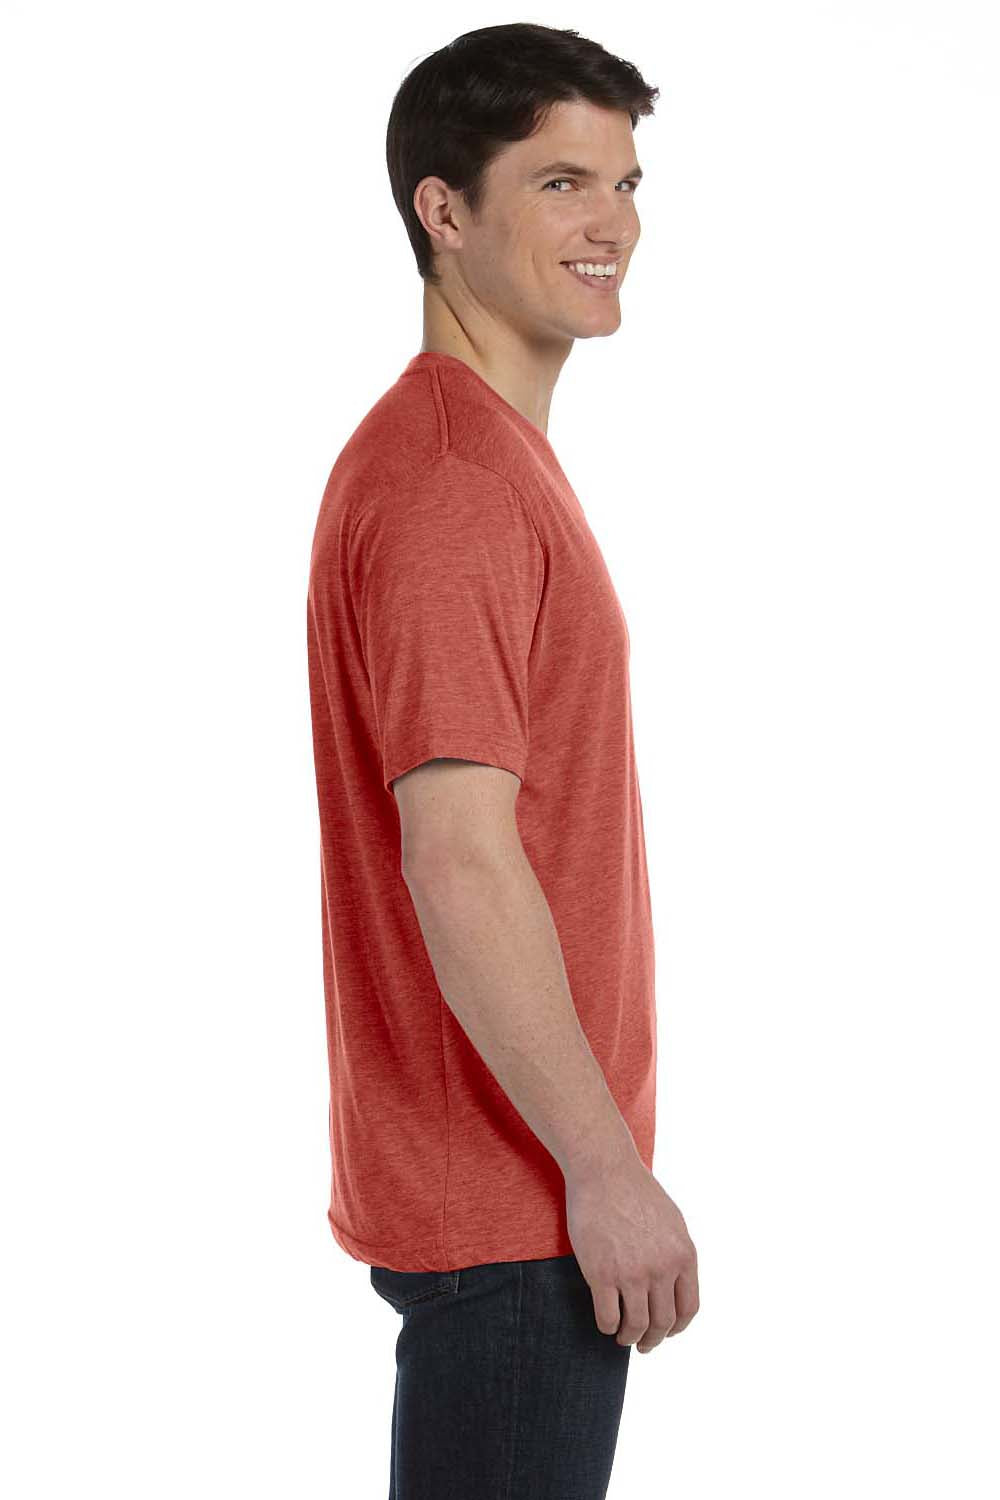 Bella + Canvas BC3415/3415C/3415 Mens Short Sleeve V-Neck T-Shirt Clay Red Model Side